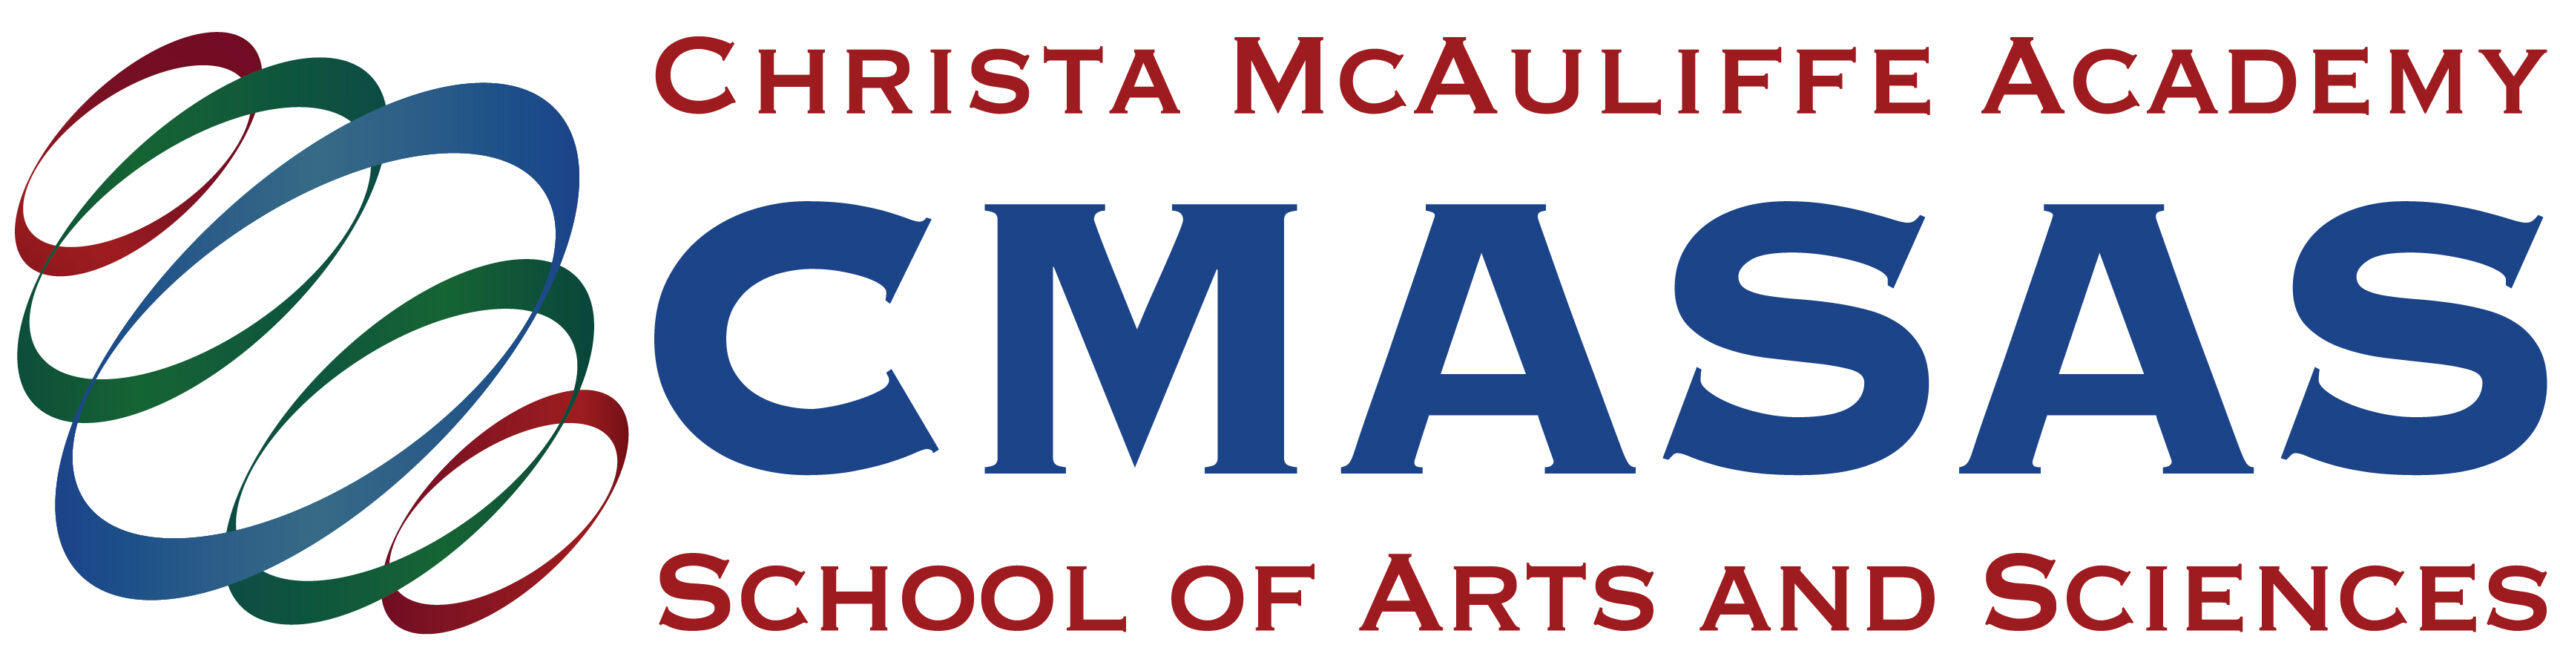 Christa McAuliffe Academy School of Arts and Sciences